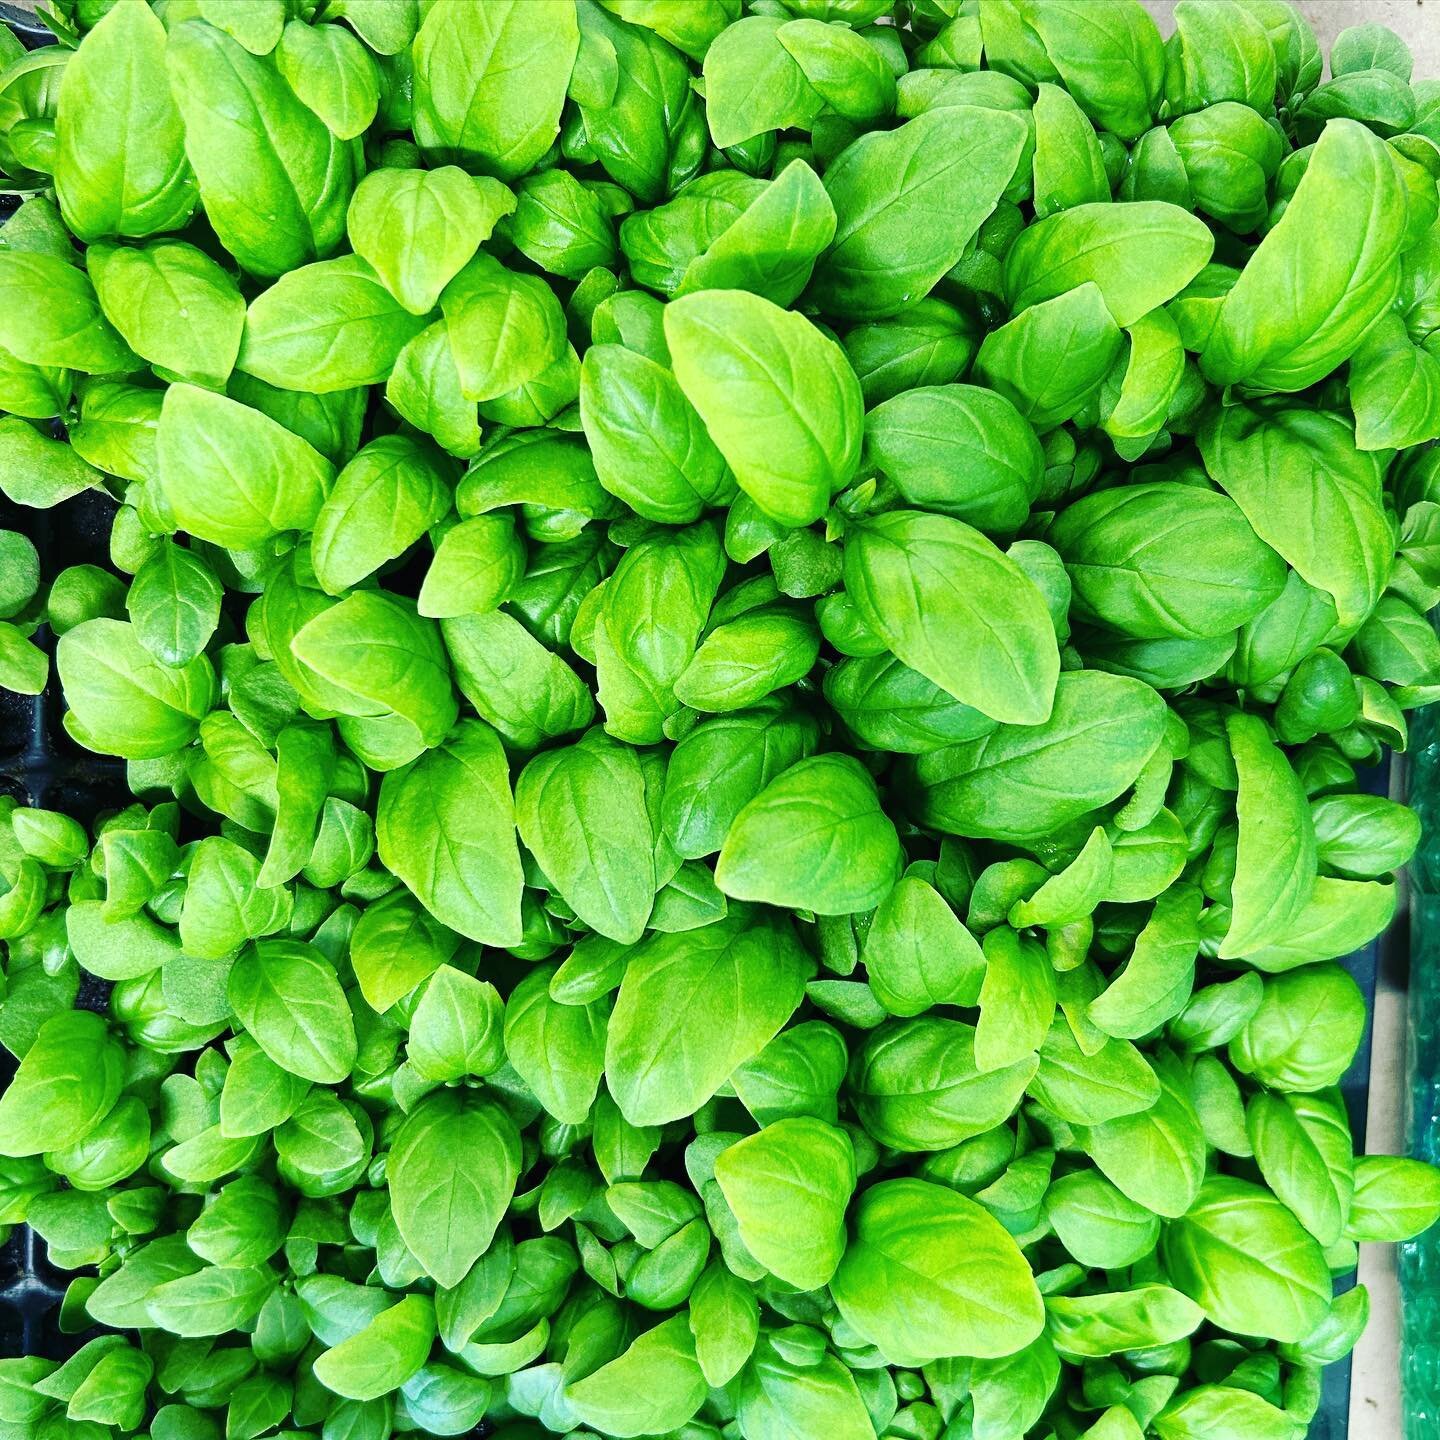 Fresh basil coming soon!  Stay tuned for where and when you can buy hyper-local, fresh basil!  #citygreensfarm #hydroponics #urbanfarming #community #growlocal #togetherwelearn #togetherwegrow #farmboxfoods